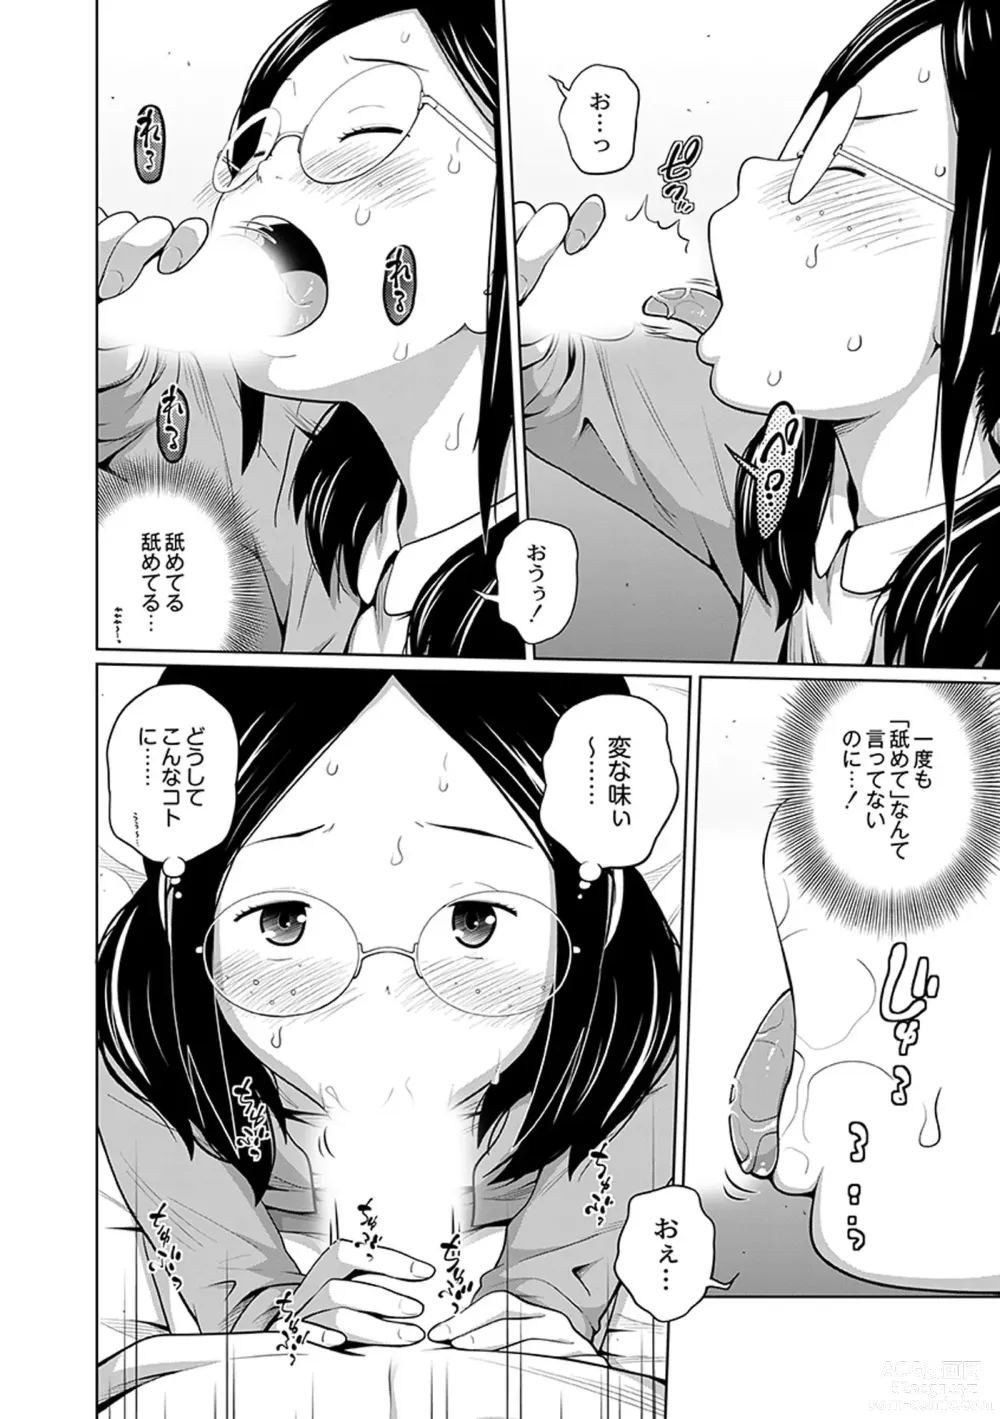 Page 10 of manga Ane Megane - spectacled sister